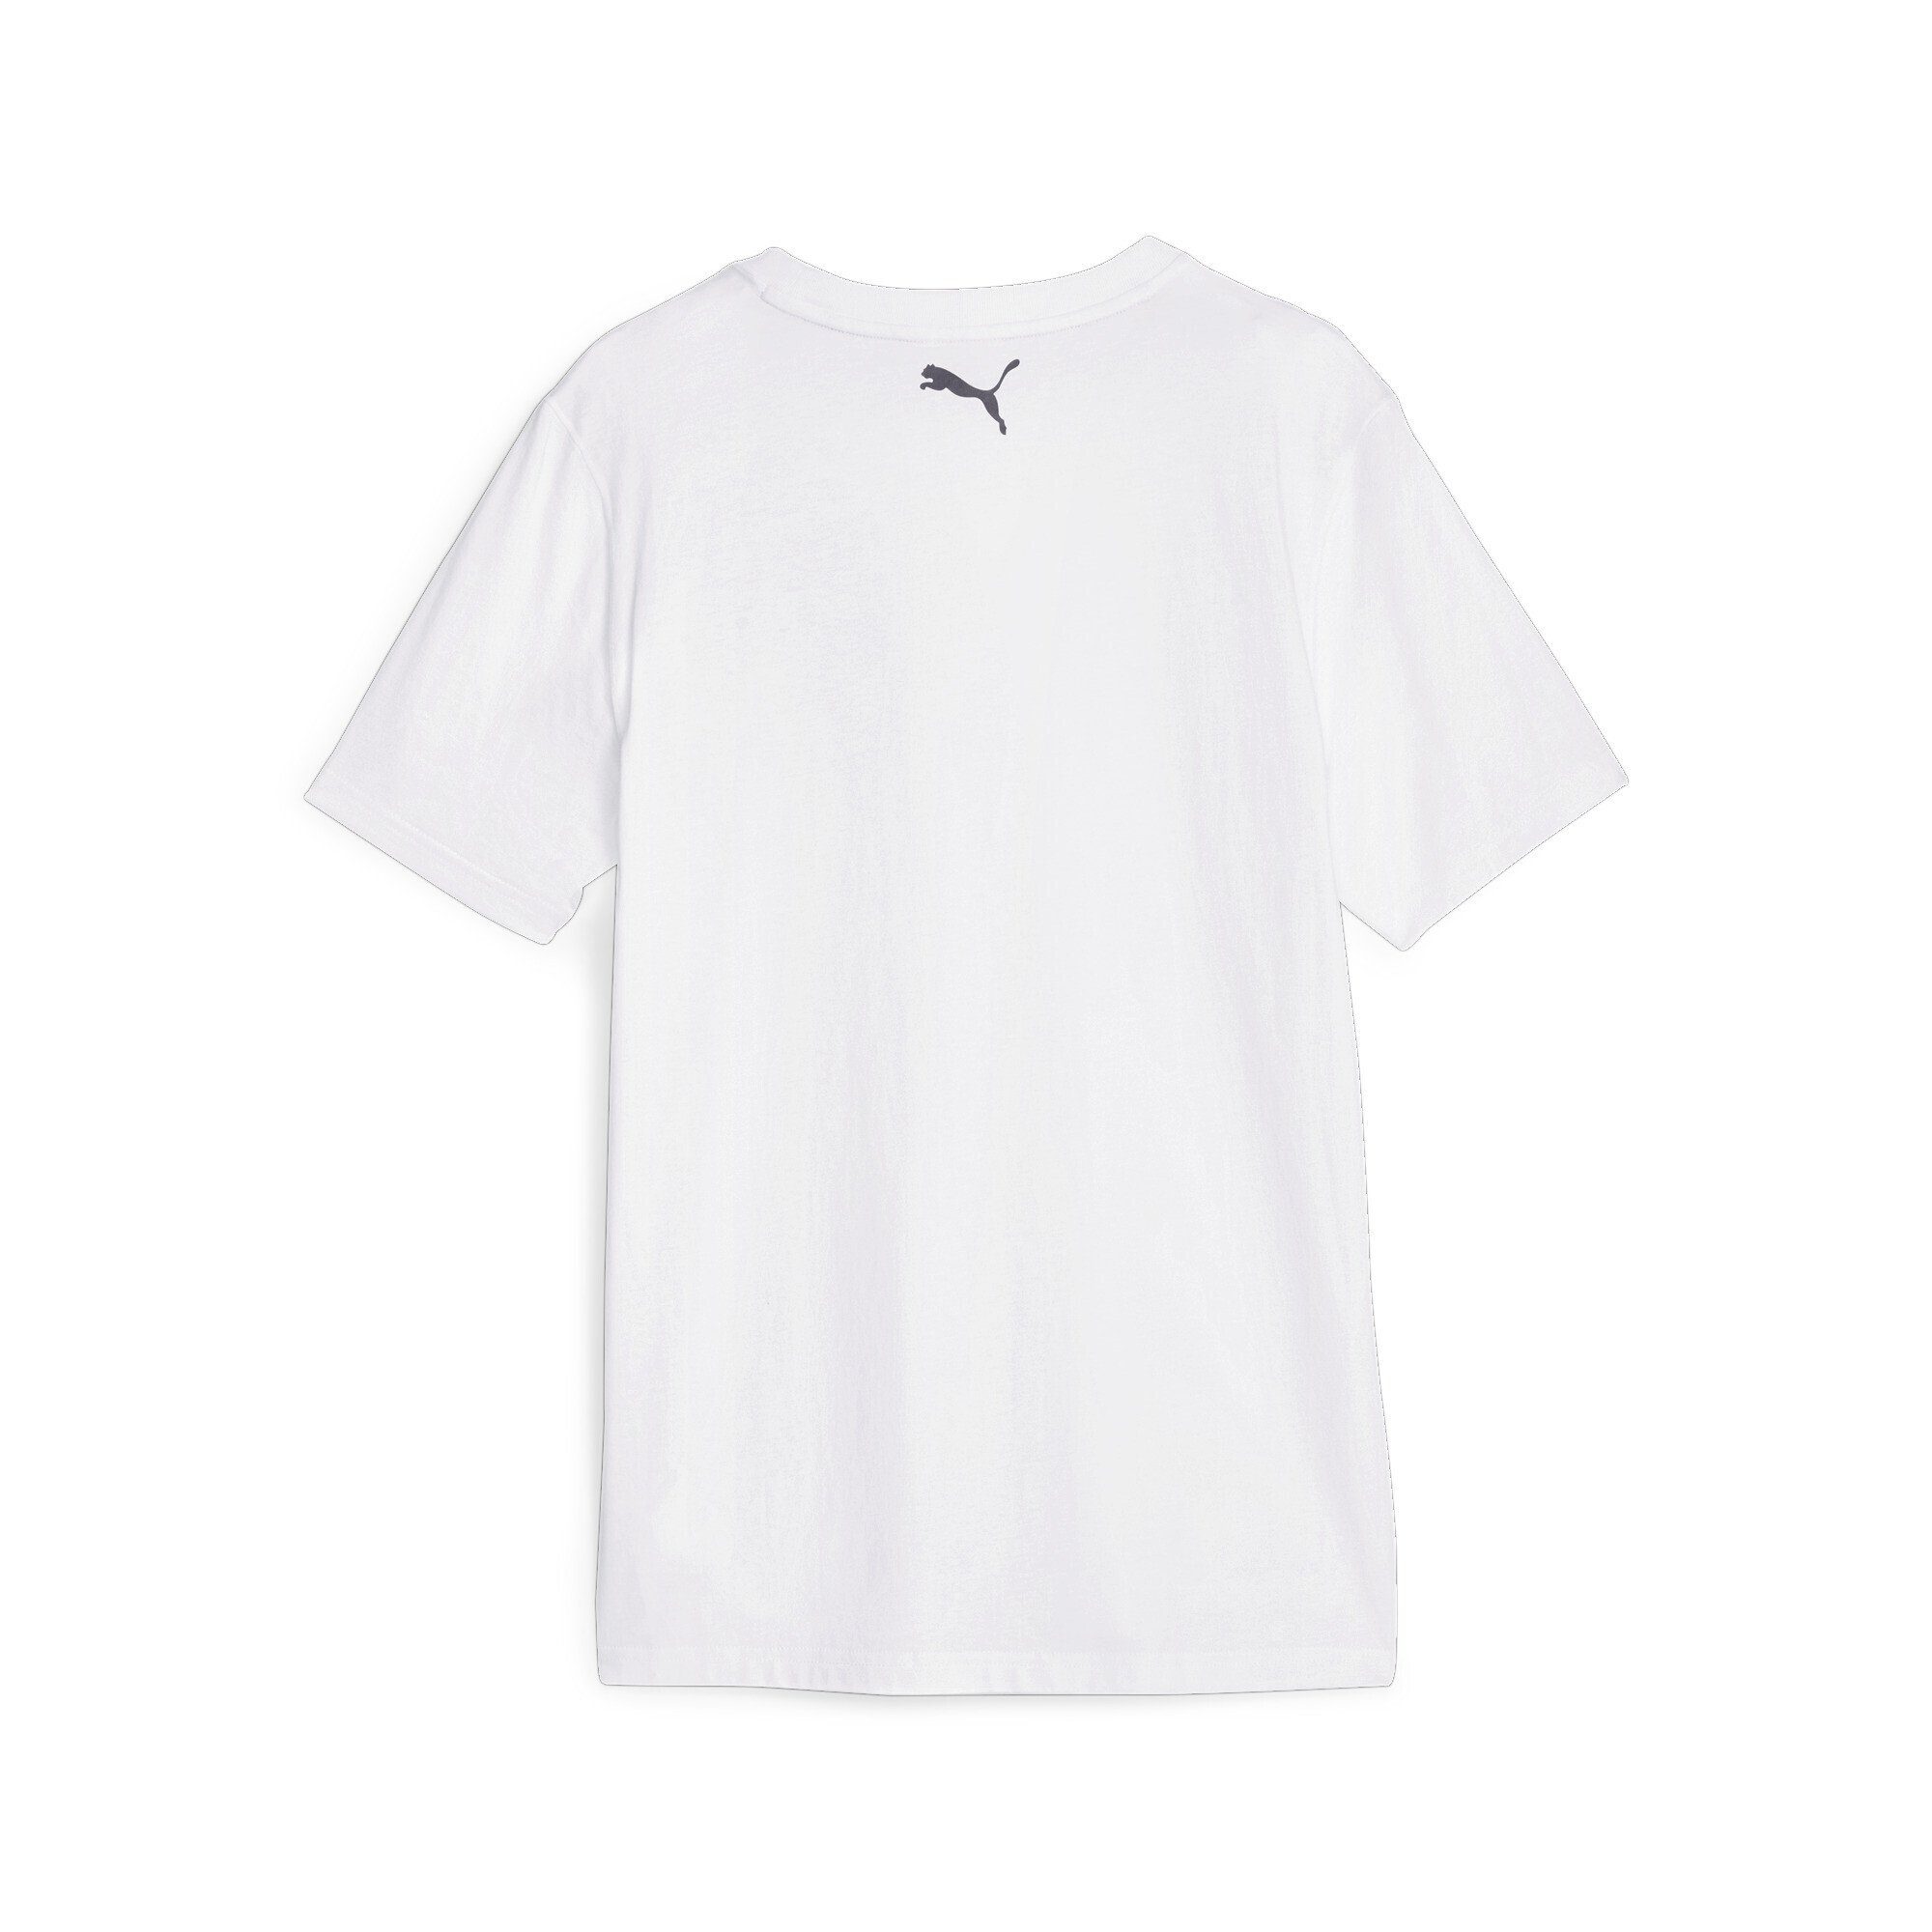 PUMA Trainingsshirt Blueprint Basketball Herren White T-Shirt